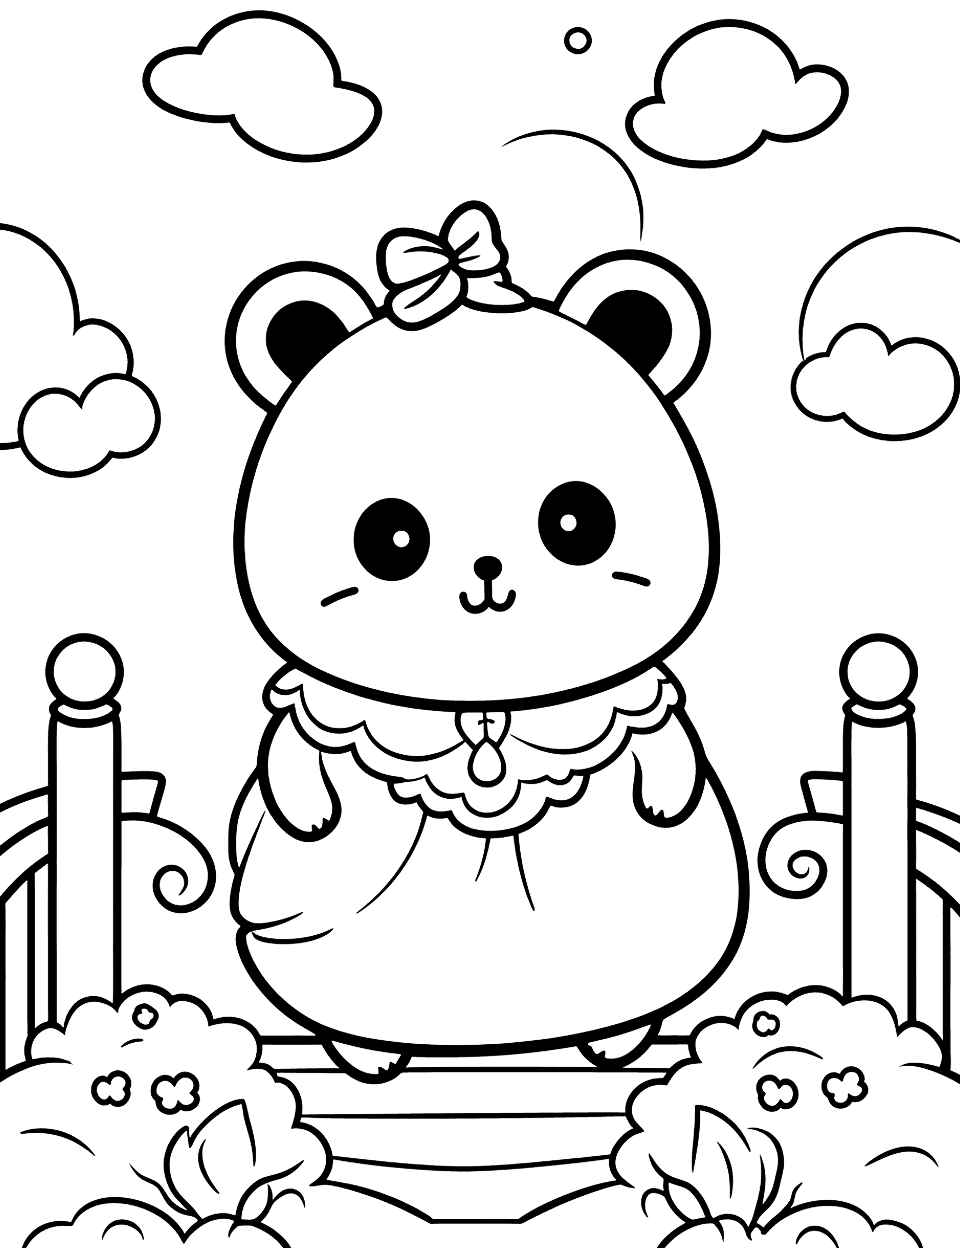 Princess Panda's Royal Garden Kawaii Coloring Page - A Kawaii panda princess taking a stroll in her beautiful royal garden.